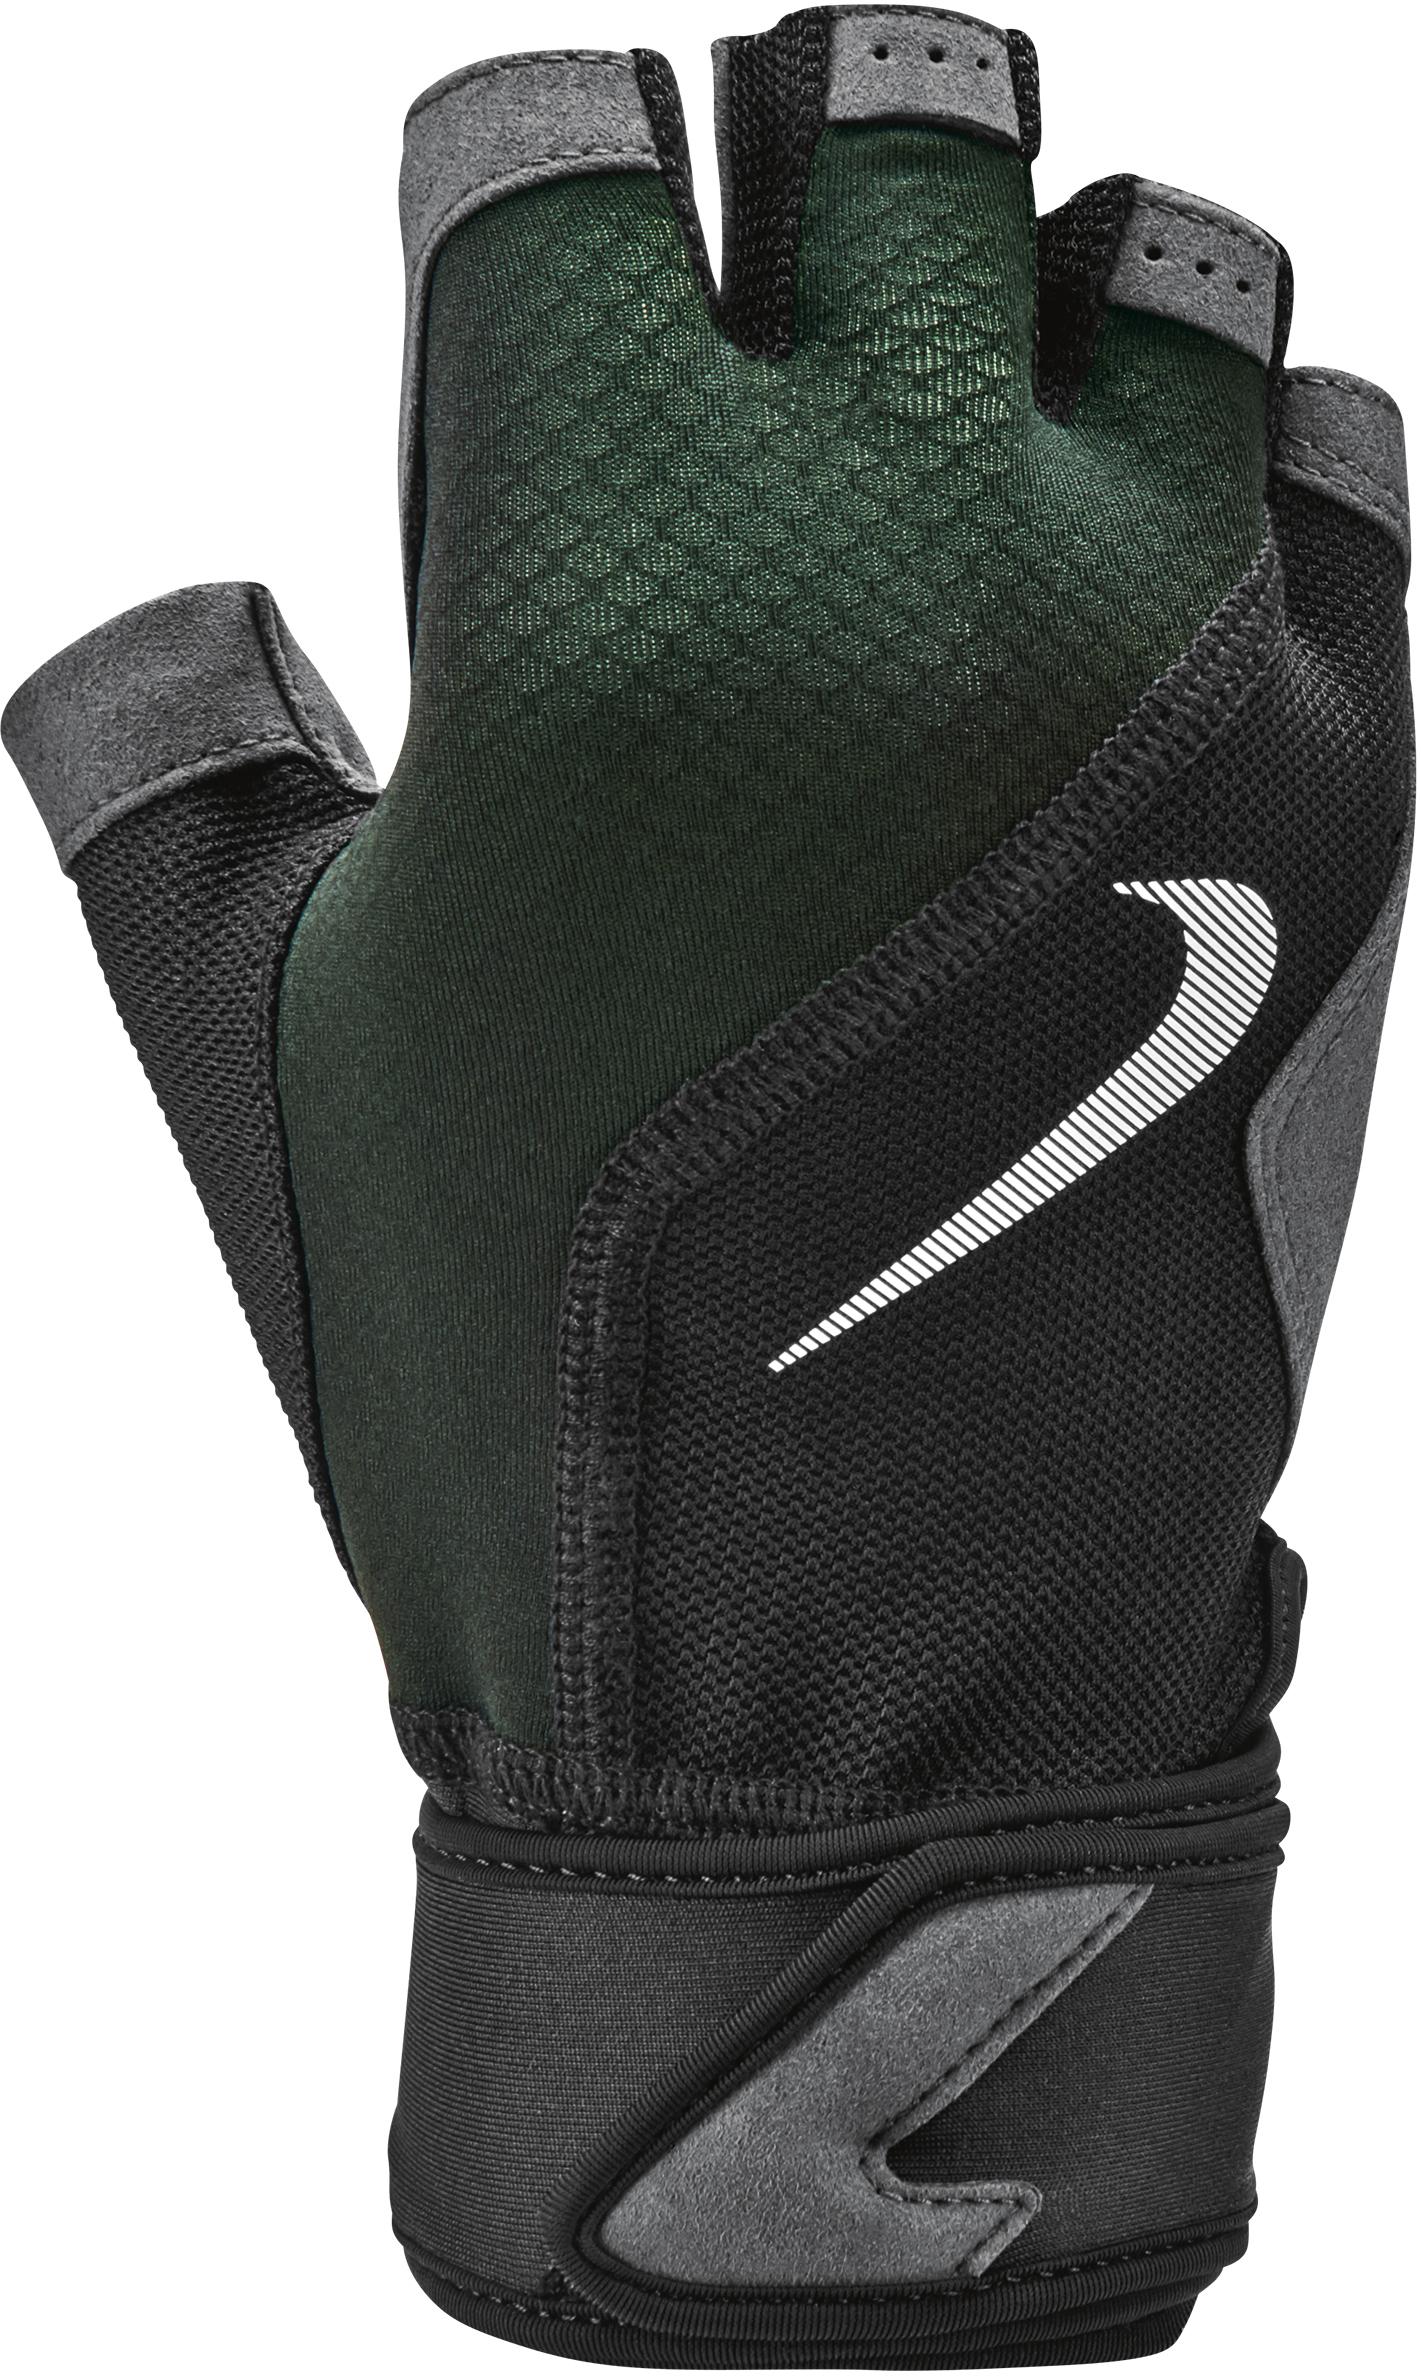 Nike Premium Fitness Gloves - Black/volt/black/white